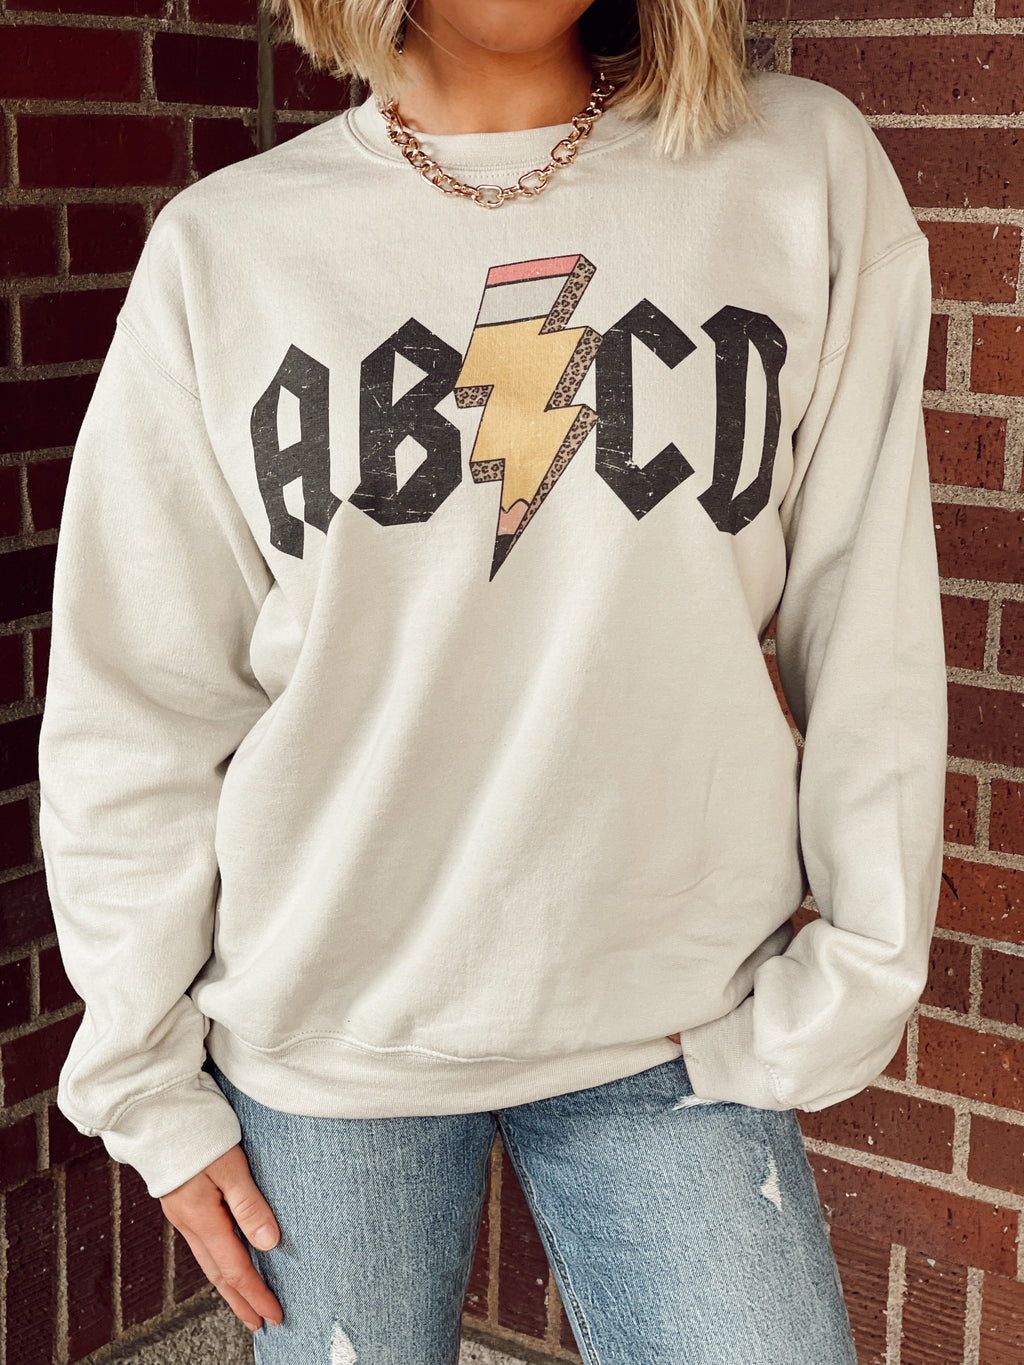 ABCD Graphic Sweatshirt - Sand